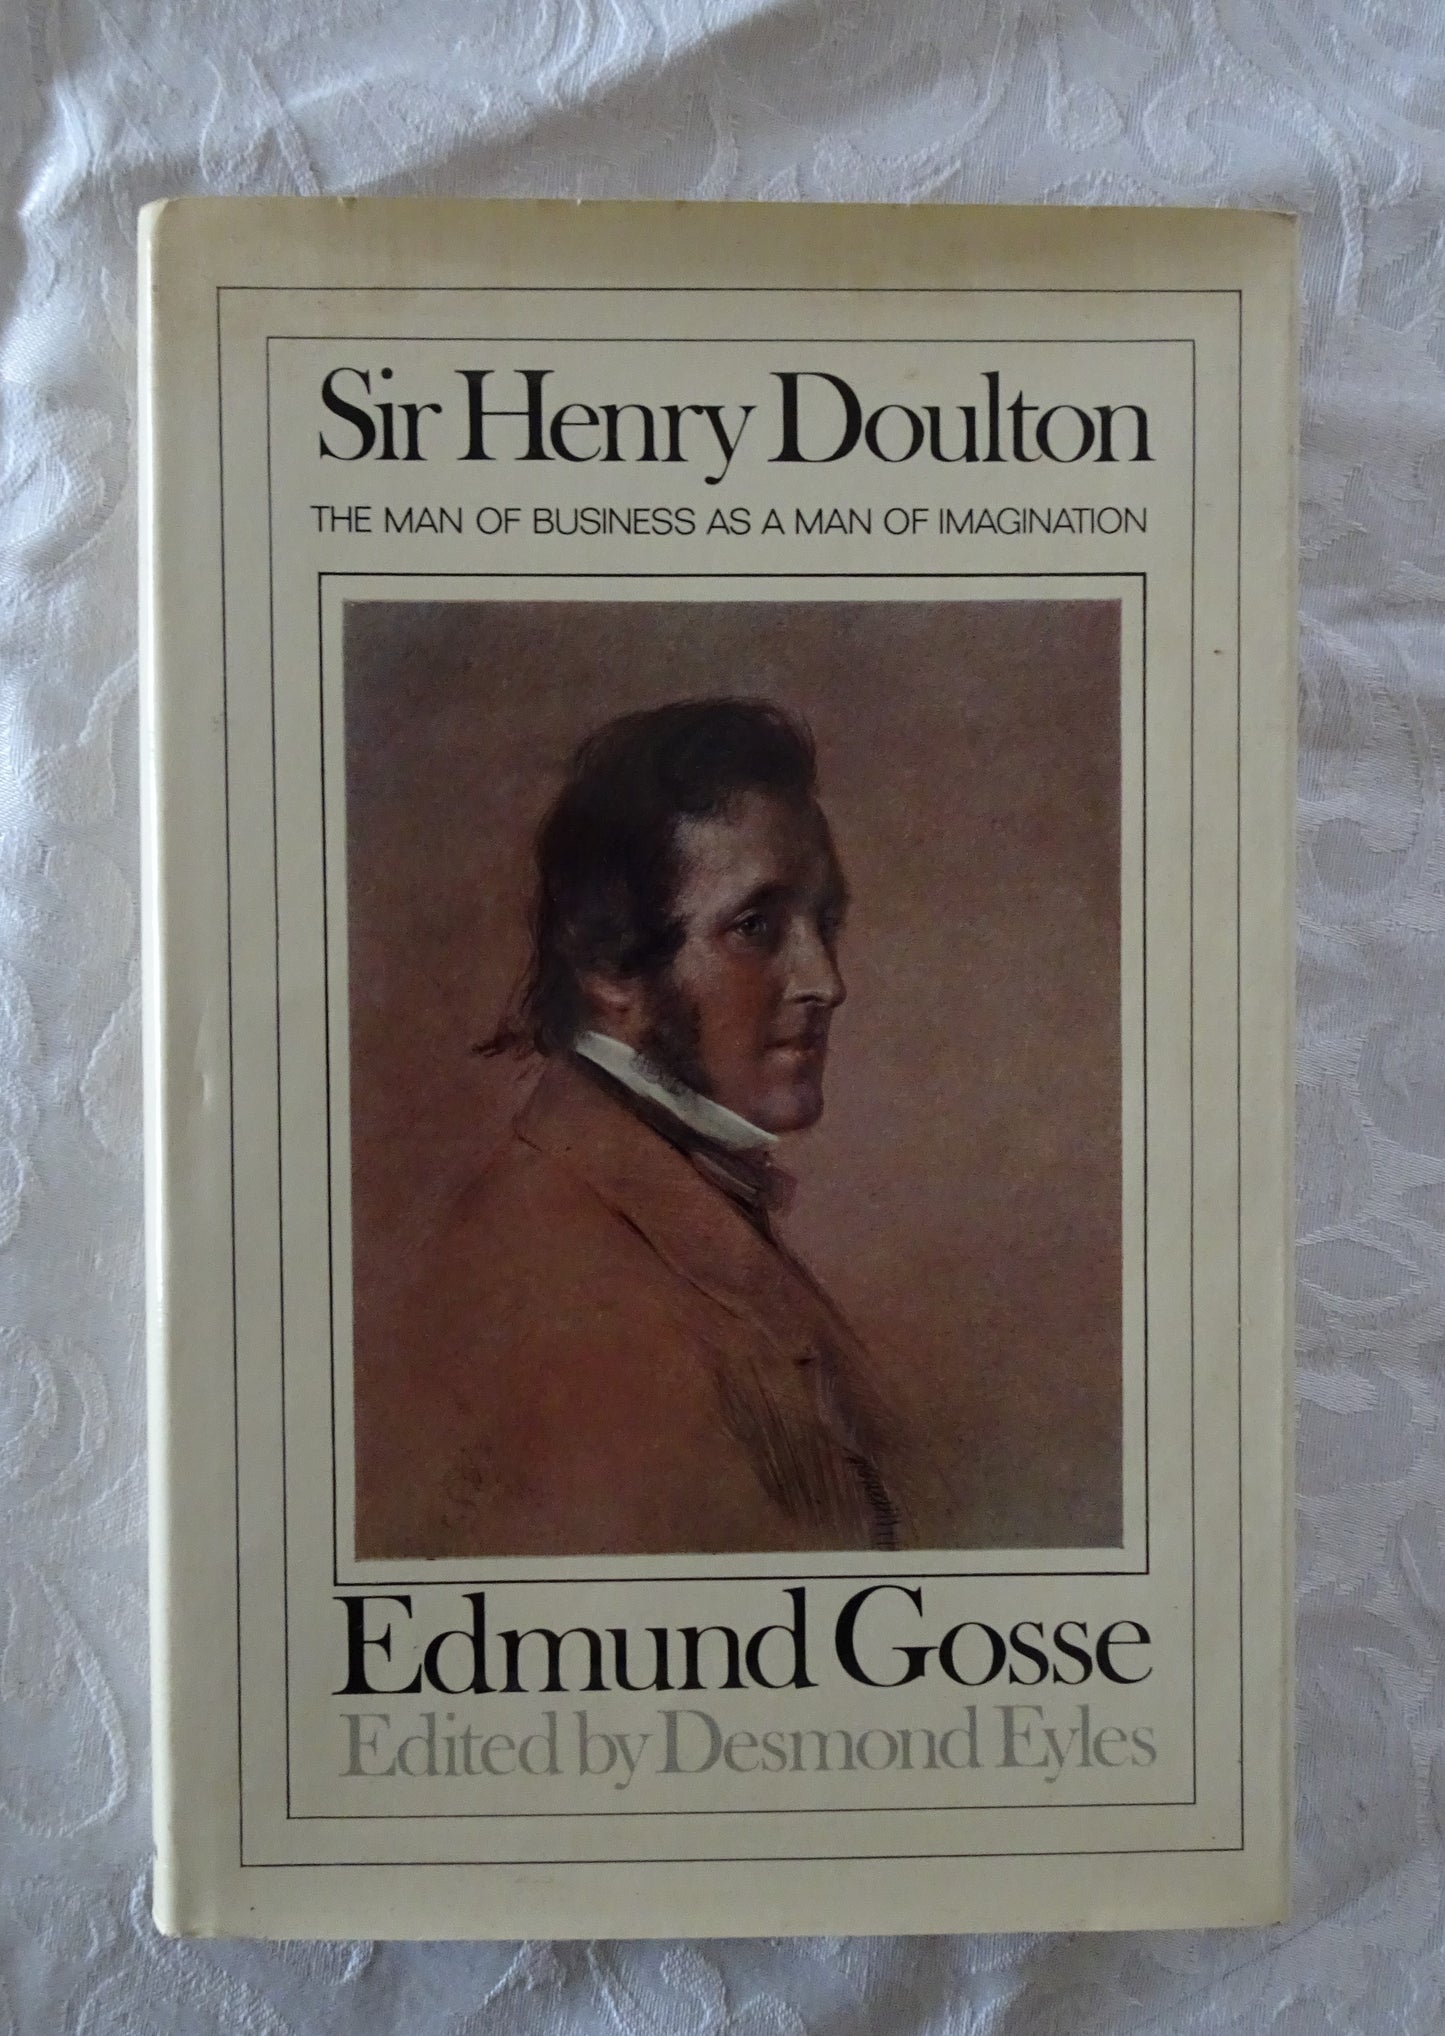 Sir Henry Doulton by Edmund Gosse, edited by Desmond Eyles